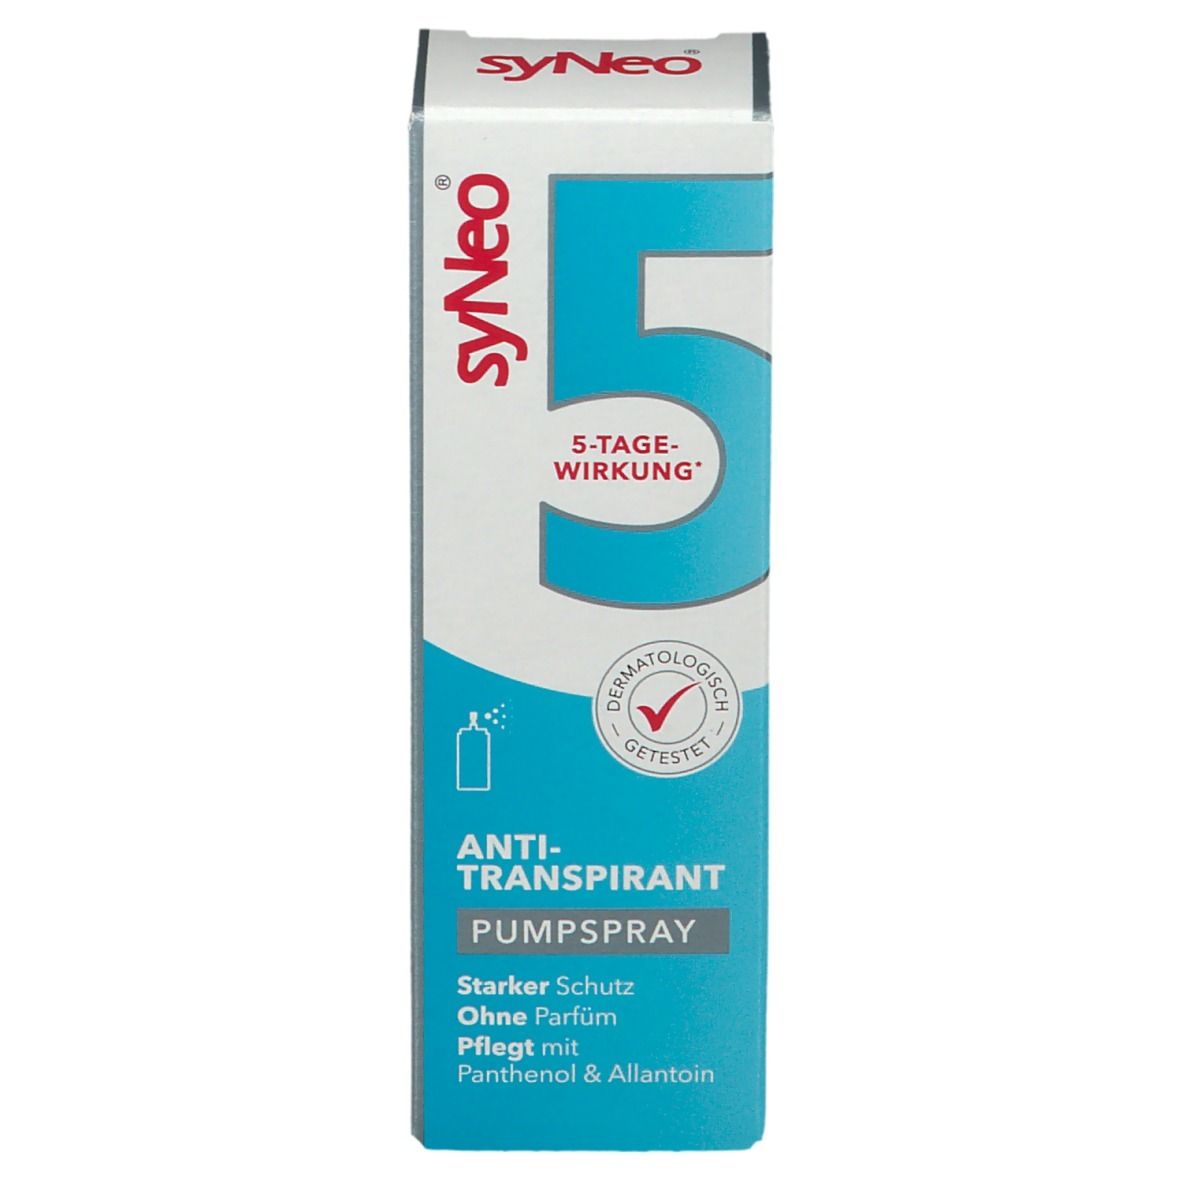 syNeo®5 Deo-Antitranspirant 30 ml shop-apotheke.com